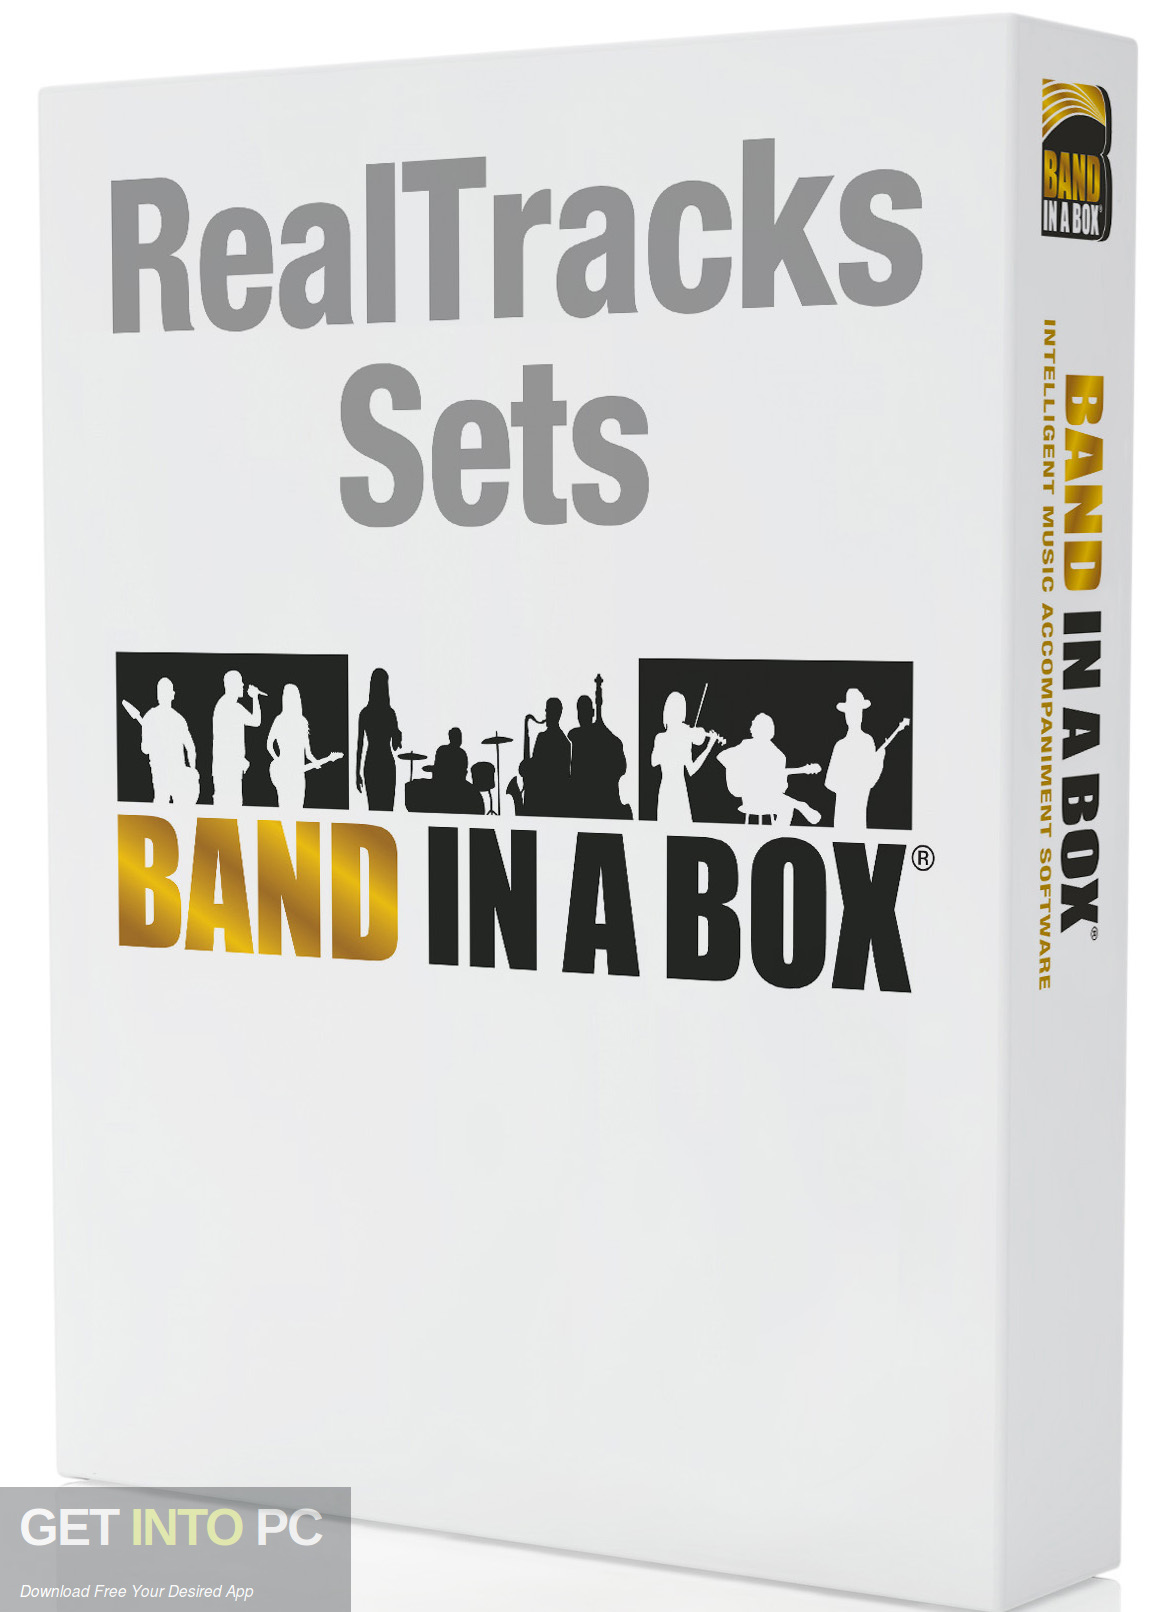 Band in a Box 2019 Crack Keygen Full Free {Latest Version}